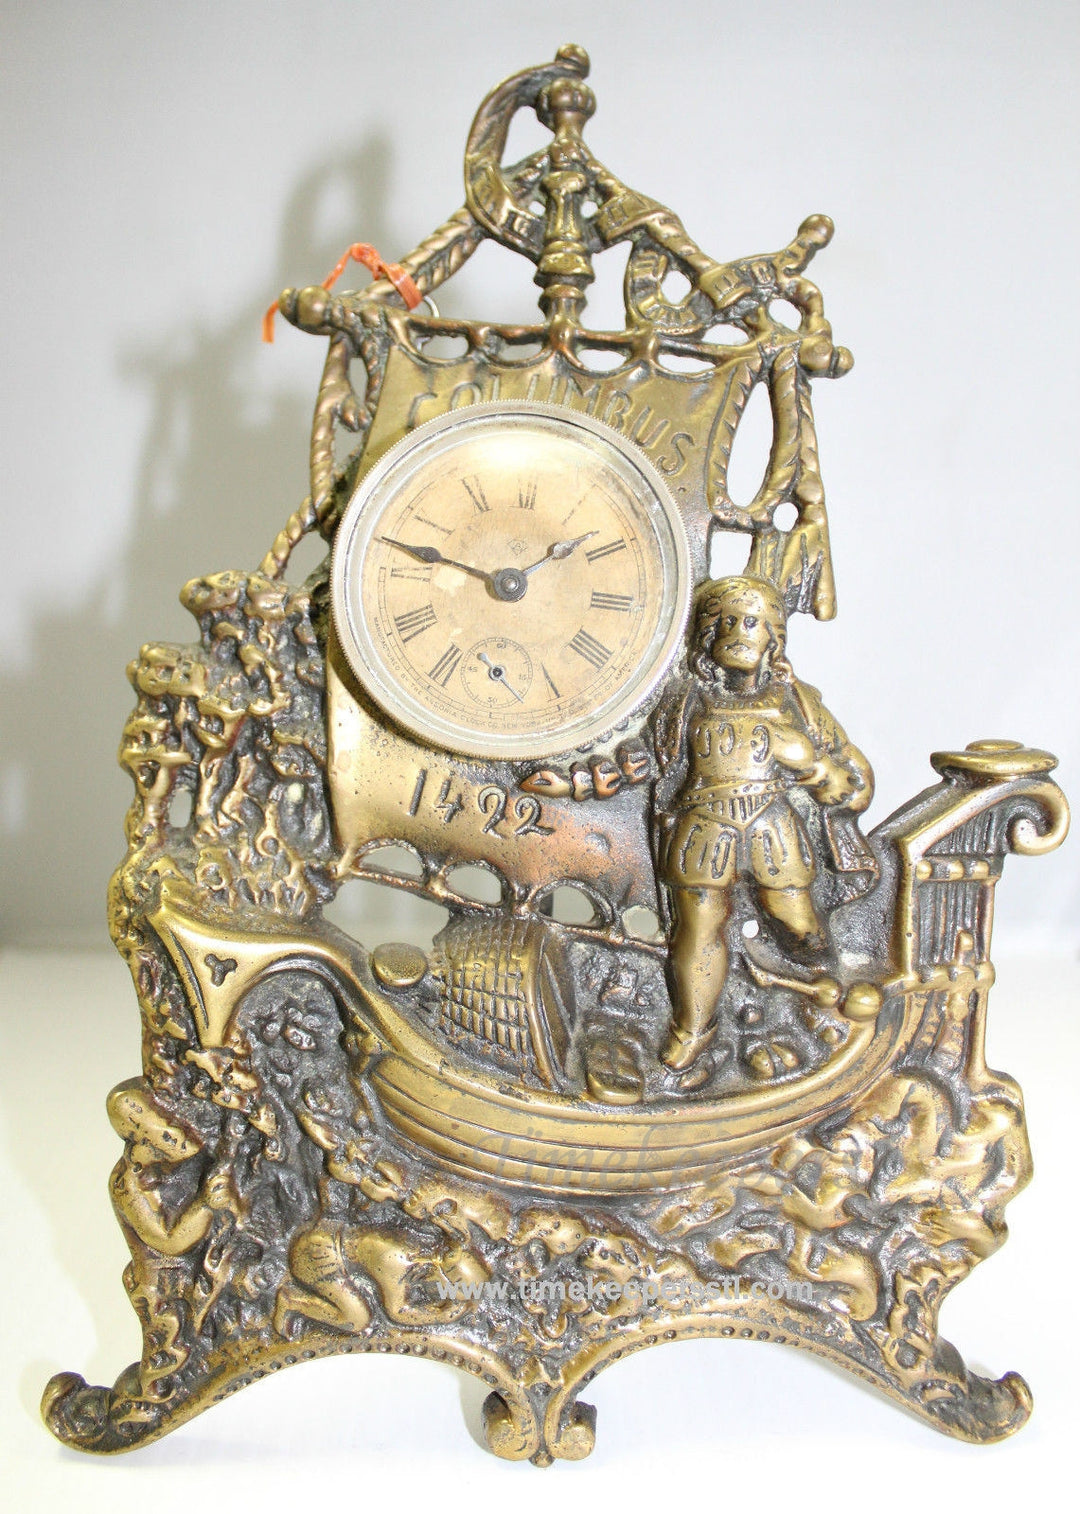 c284 Antique Cast Iron Columbus 1492 Boat Standing Clock 1892 Working Condition